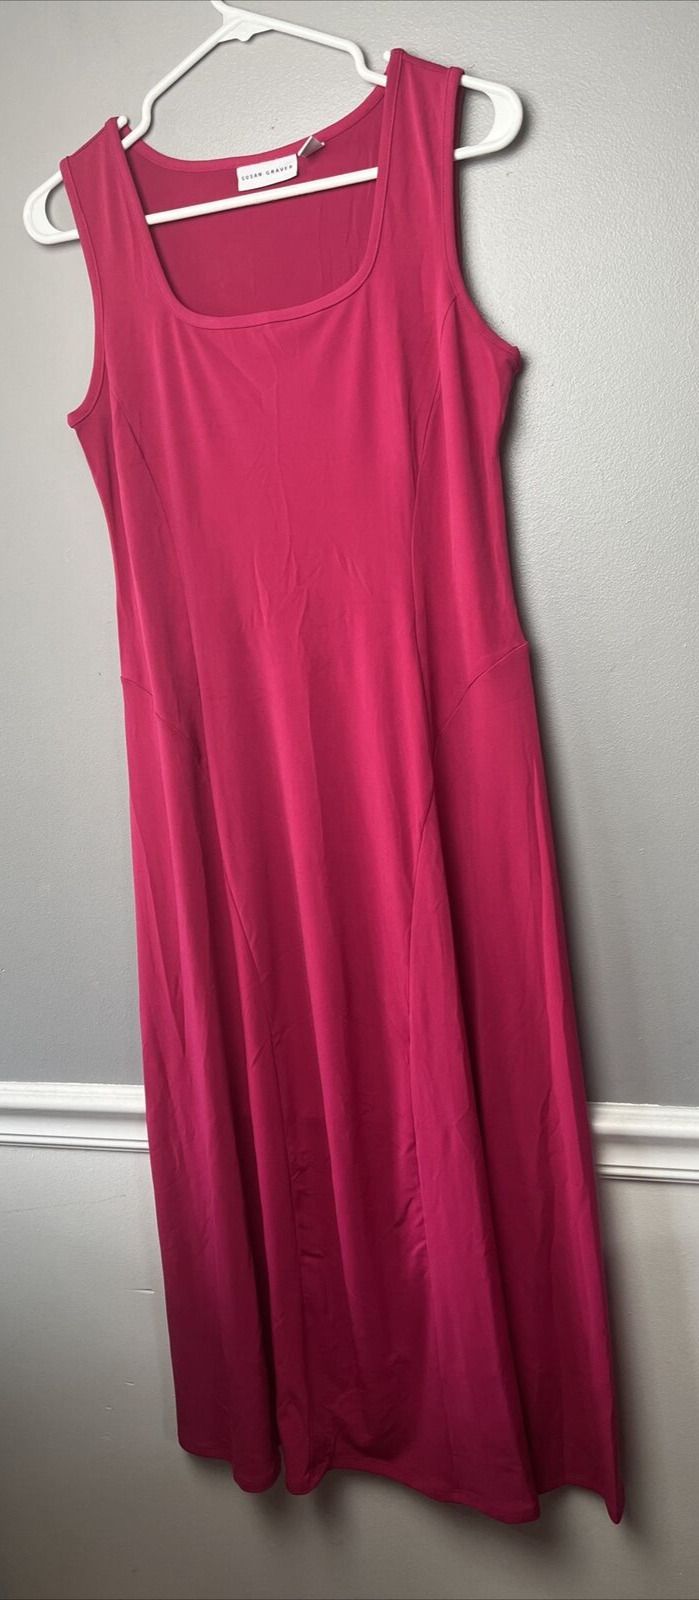 Susan Graver Dress Sz X-Small Regular Liquid Knit Sleeveless Midi Pink A480677